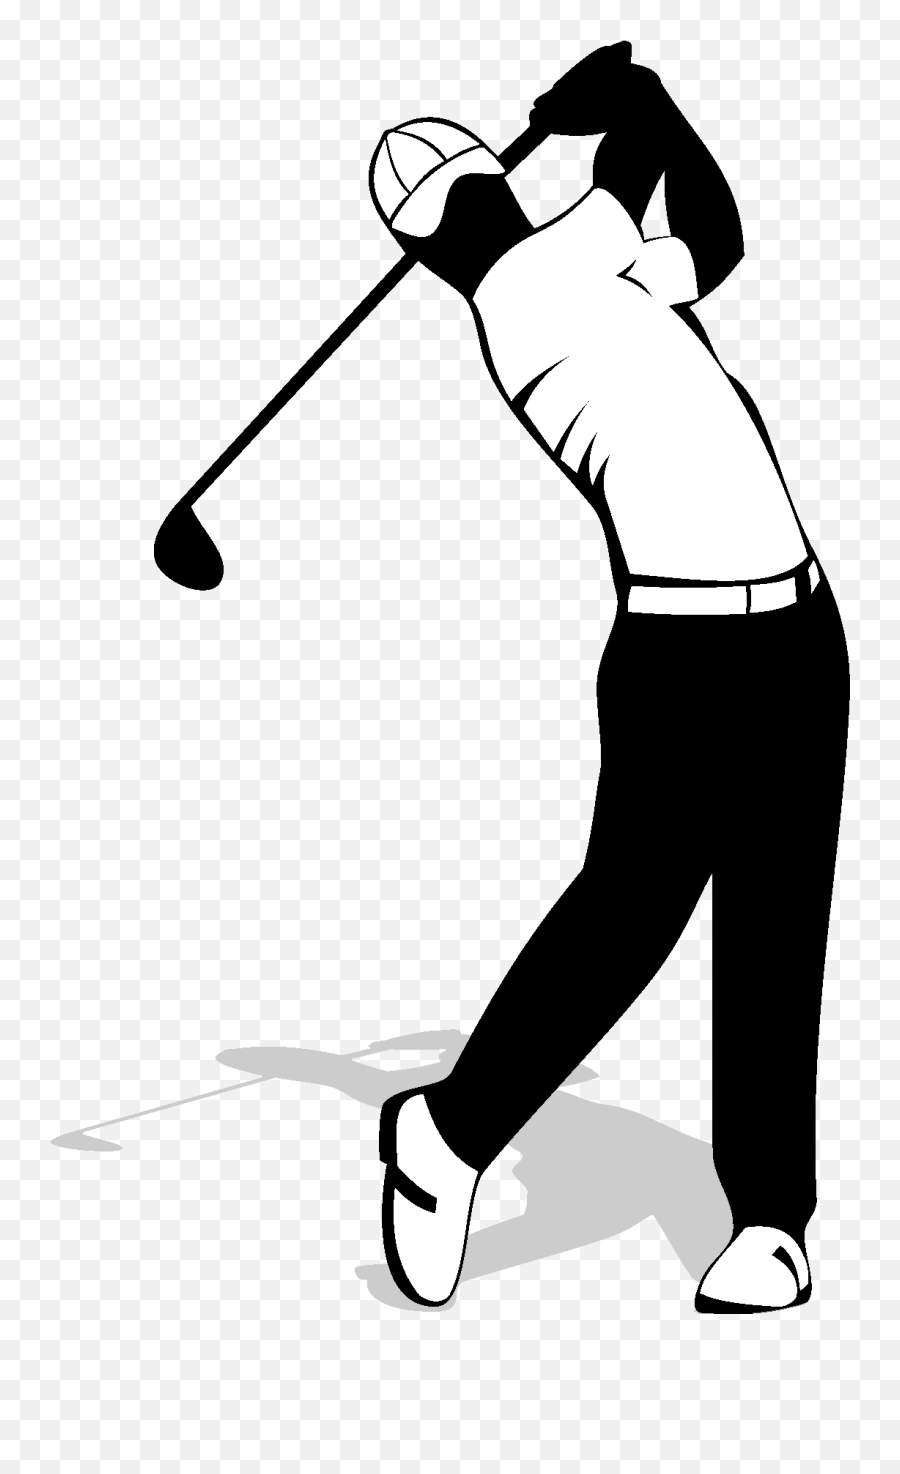 Golf Clubs Golf Course - Basketball Silhouette Png Download Clip Art Golfer Png Emoji,Golf Clubs Clipart